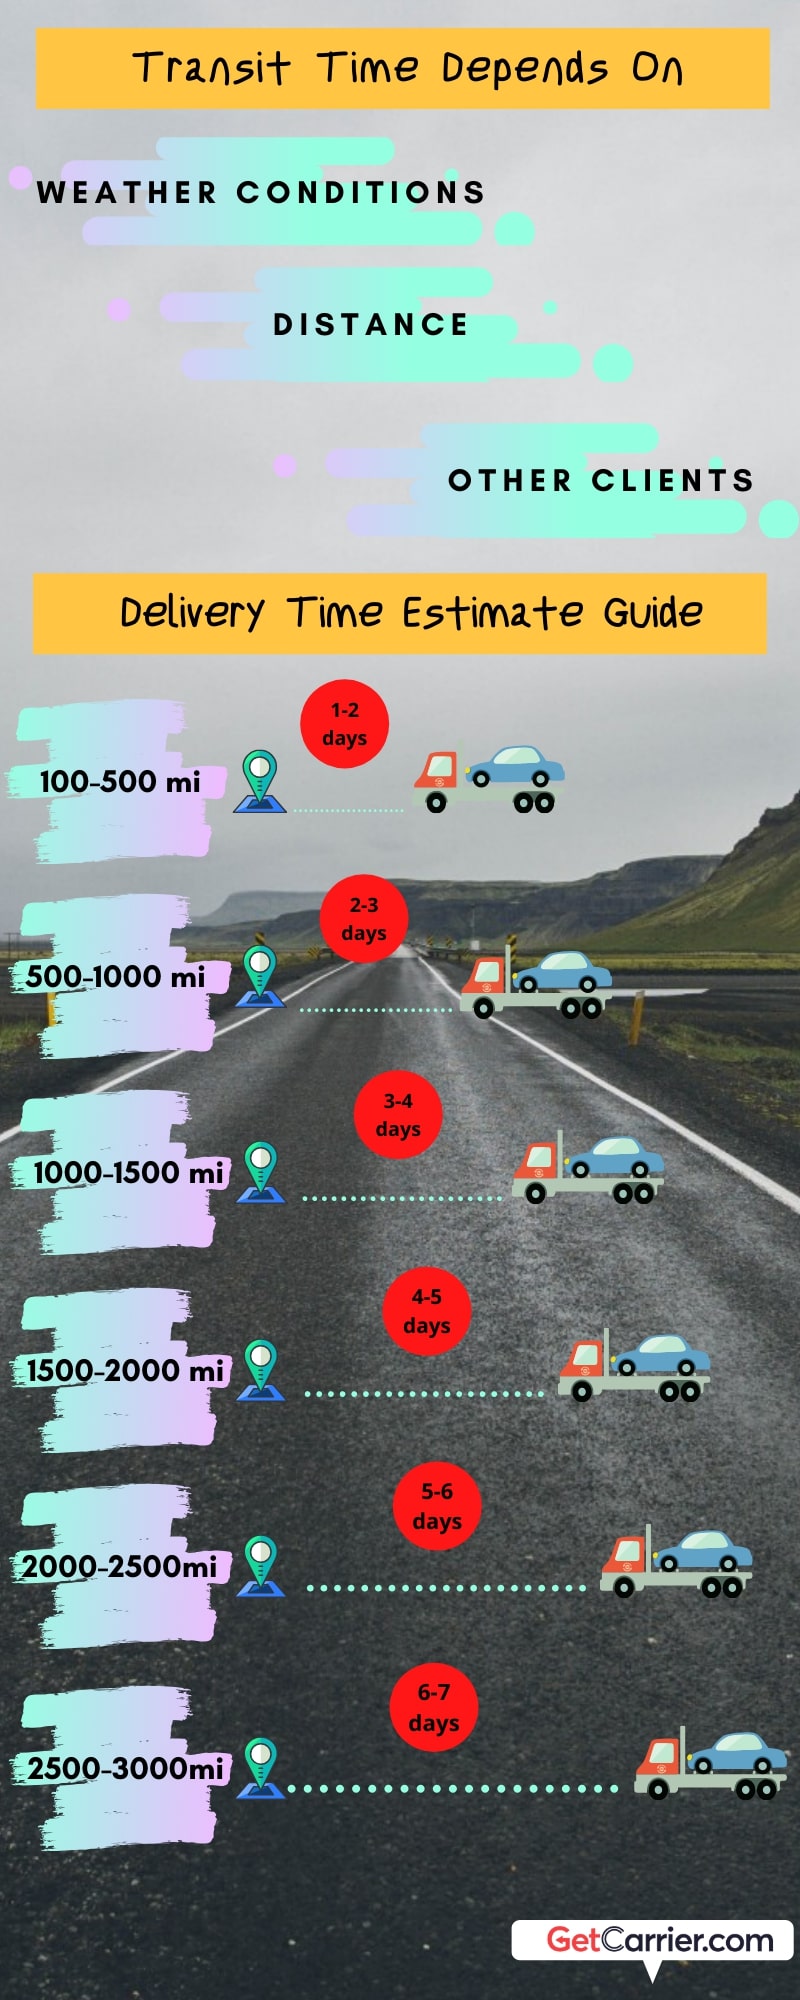 Delivery Time Estimate Guide